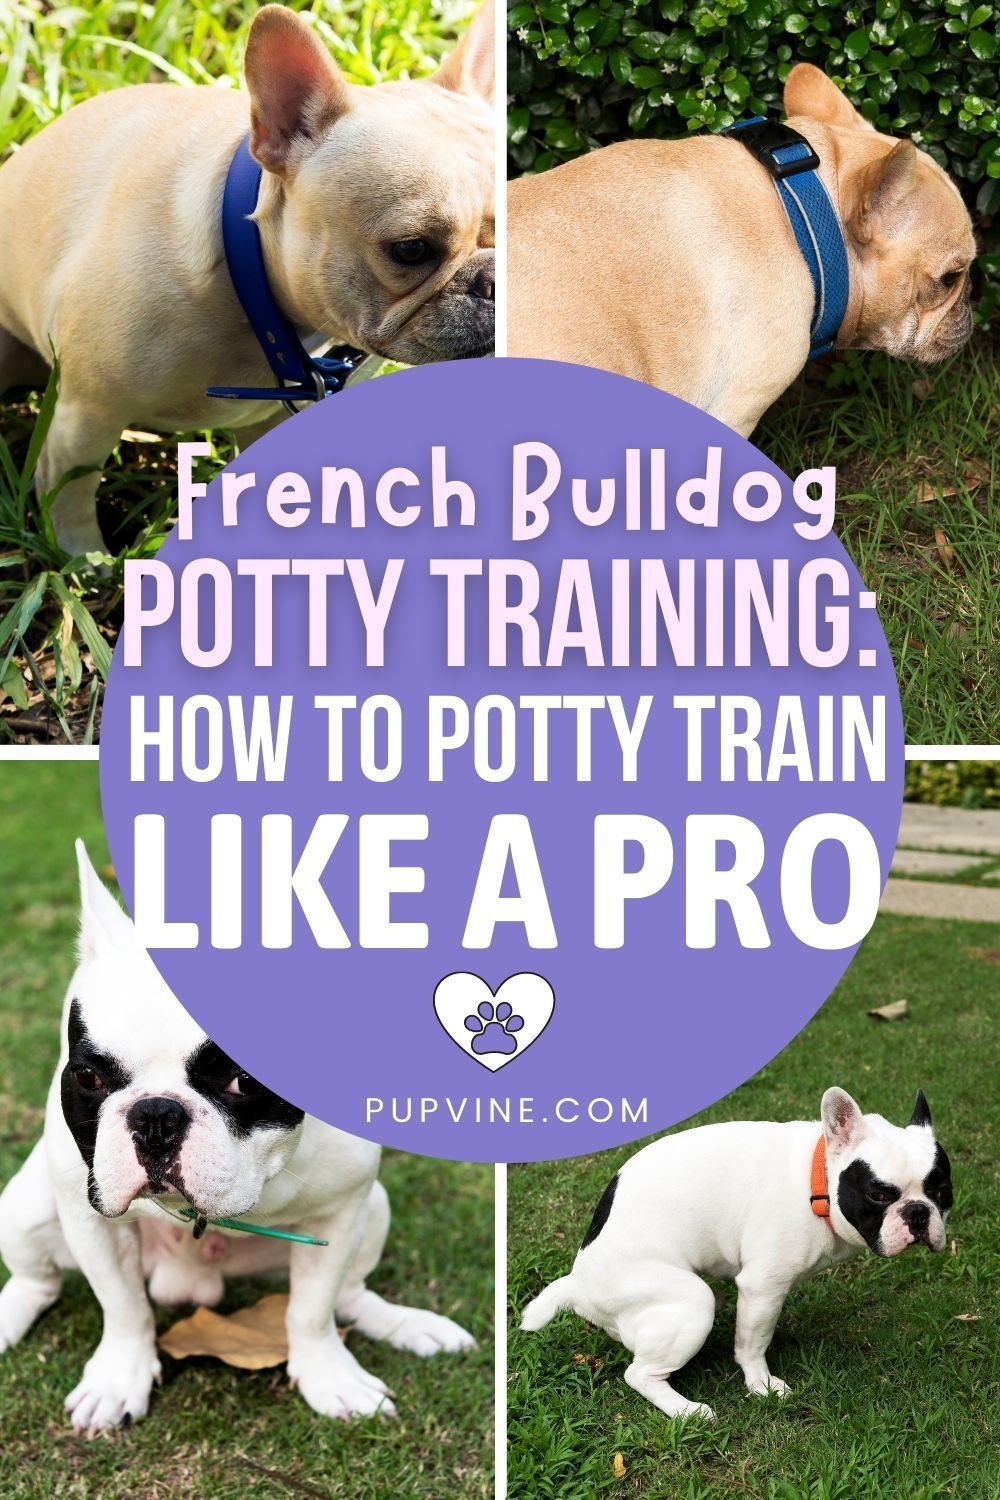 French Bulldog Potty Training: How To Potty Train Like A